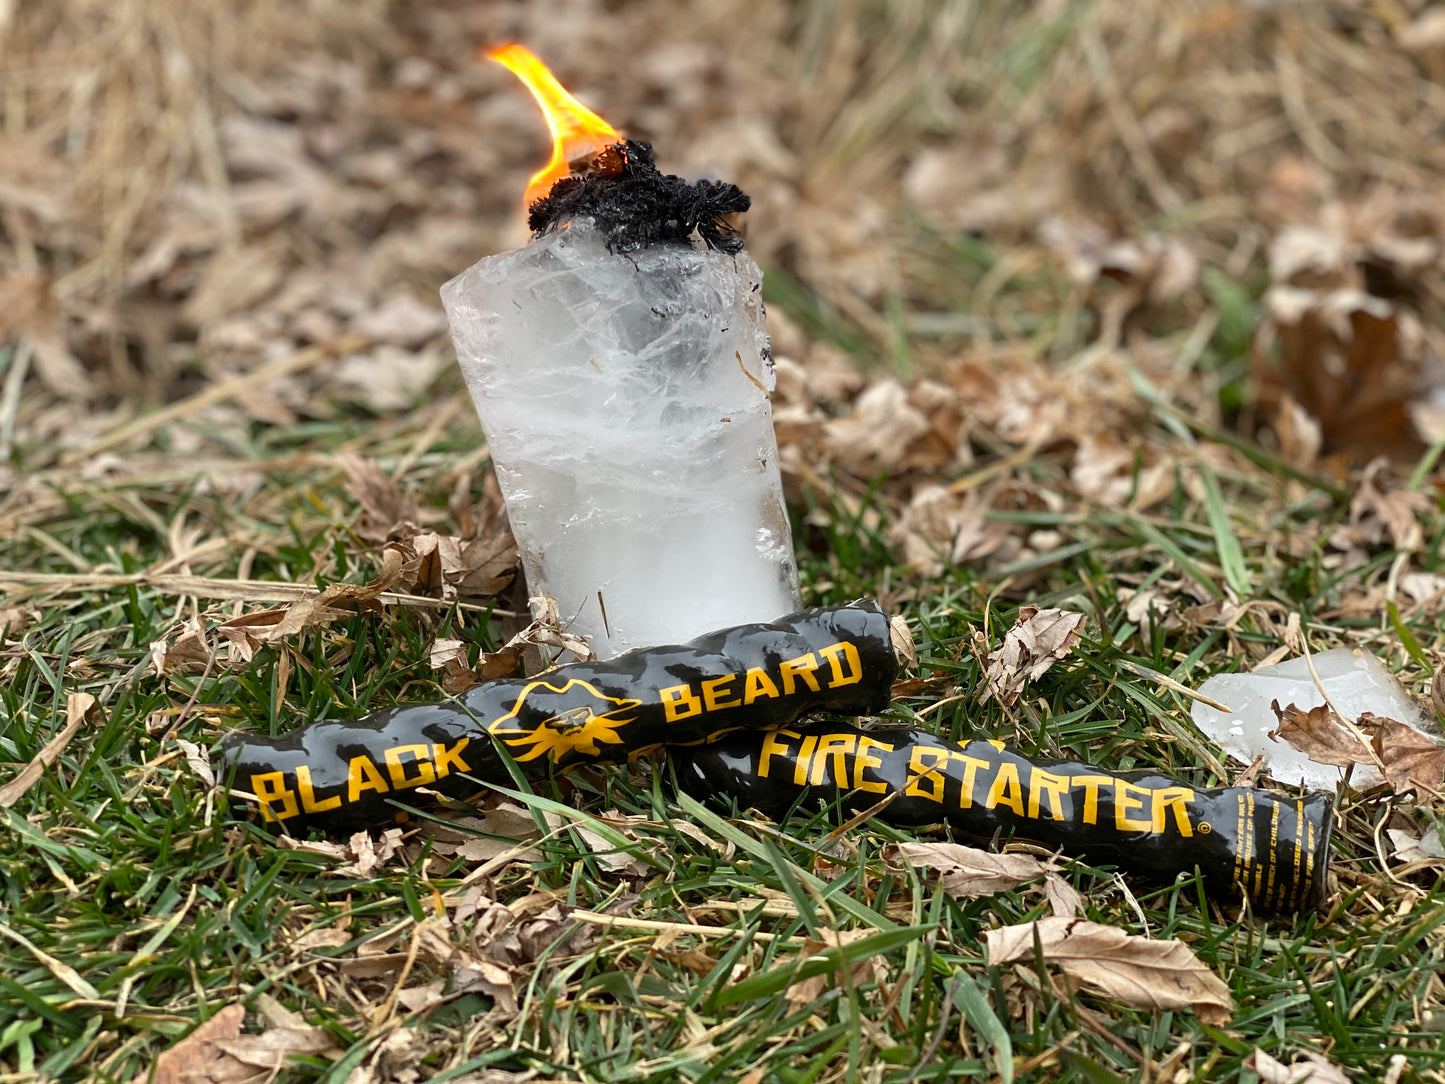 Black Beard Fire Starter (Fire Starter Rope)